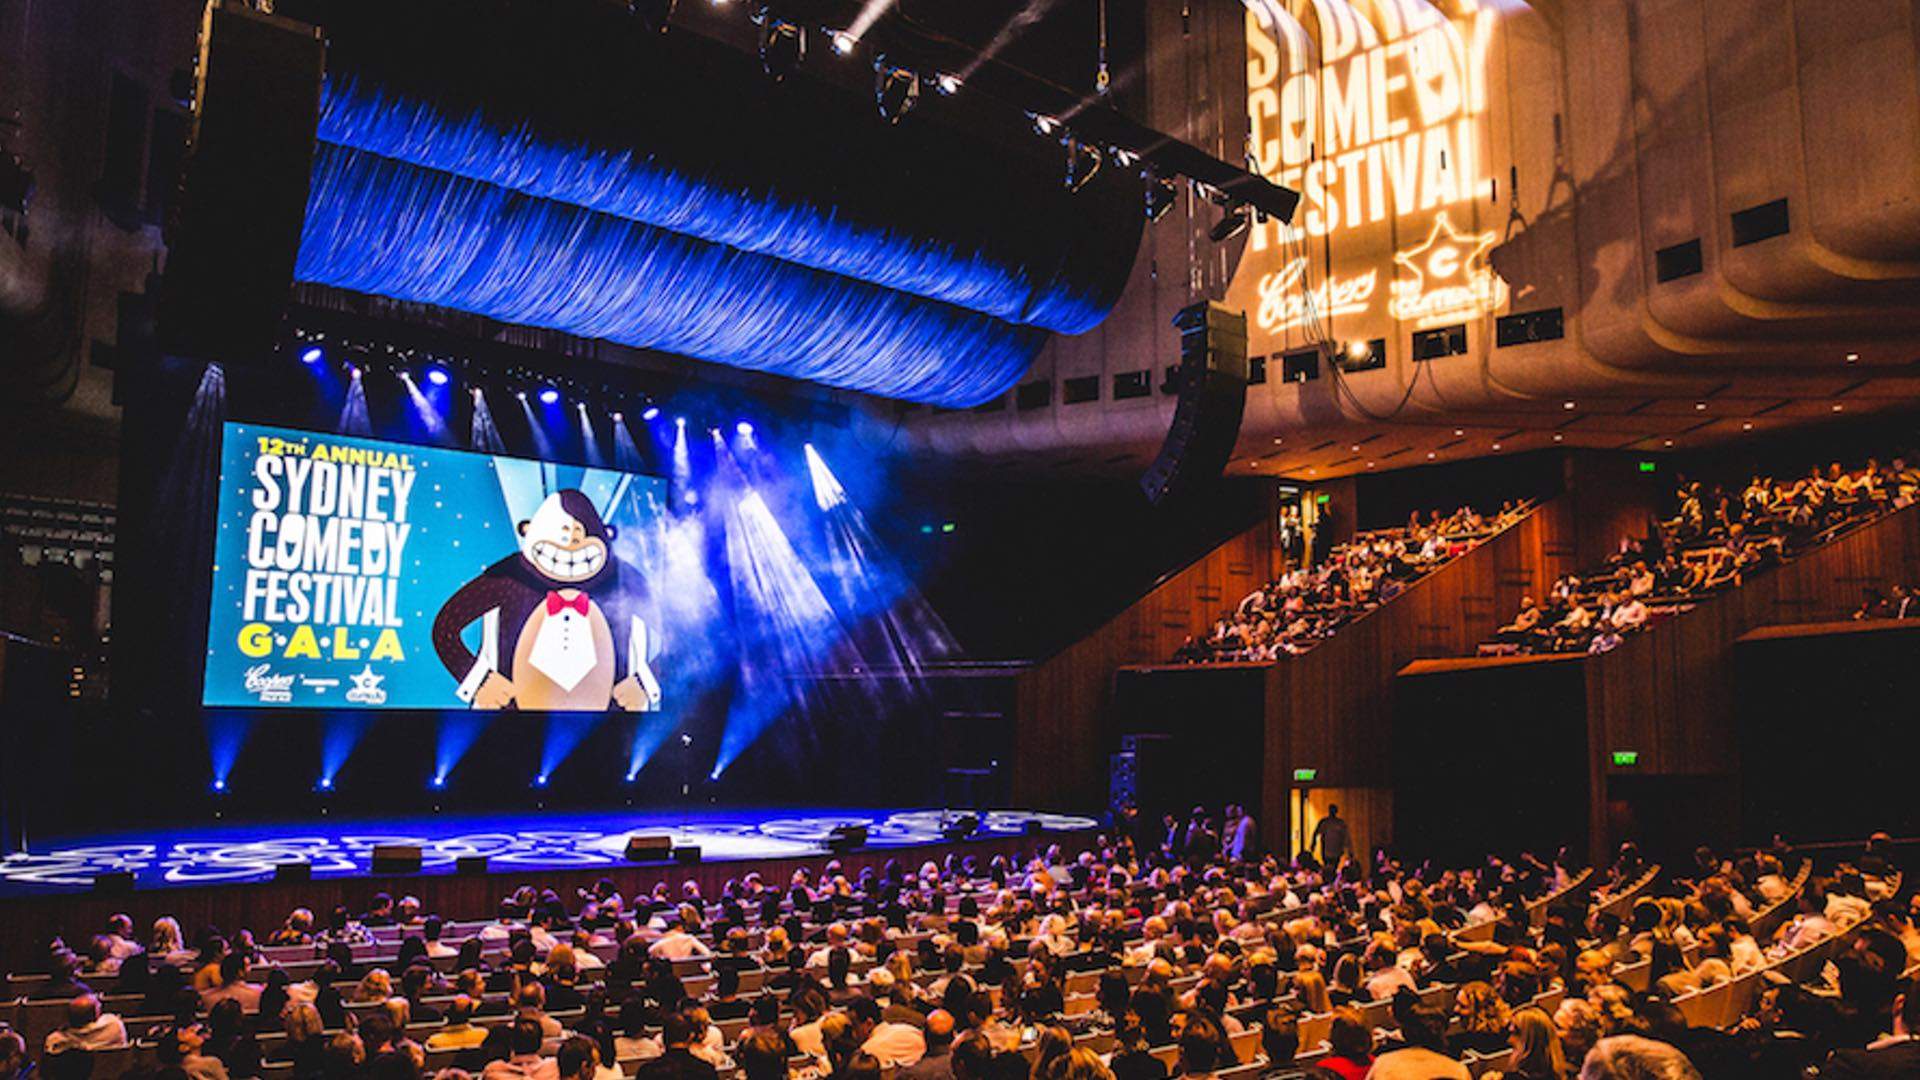 Sydney Comedy Festival 2018